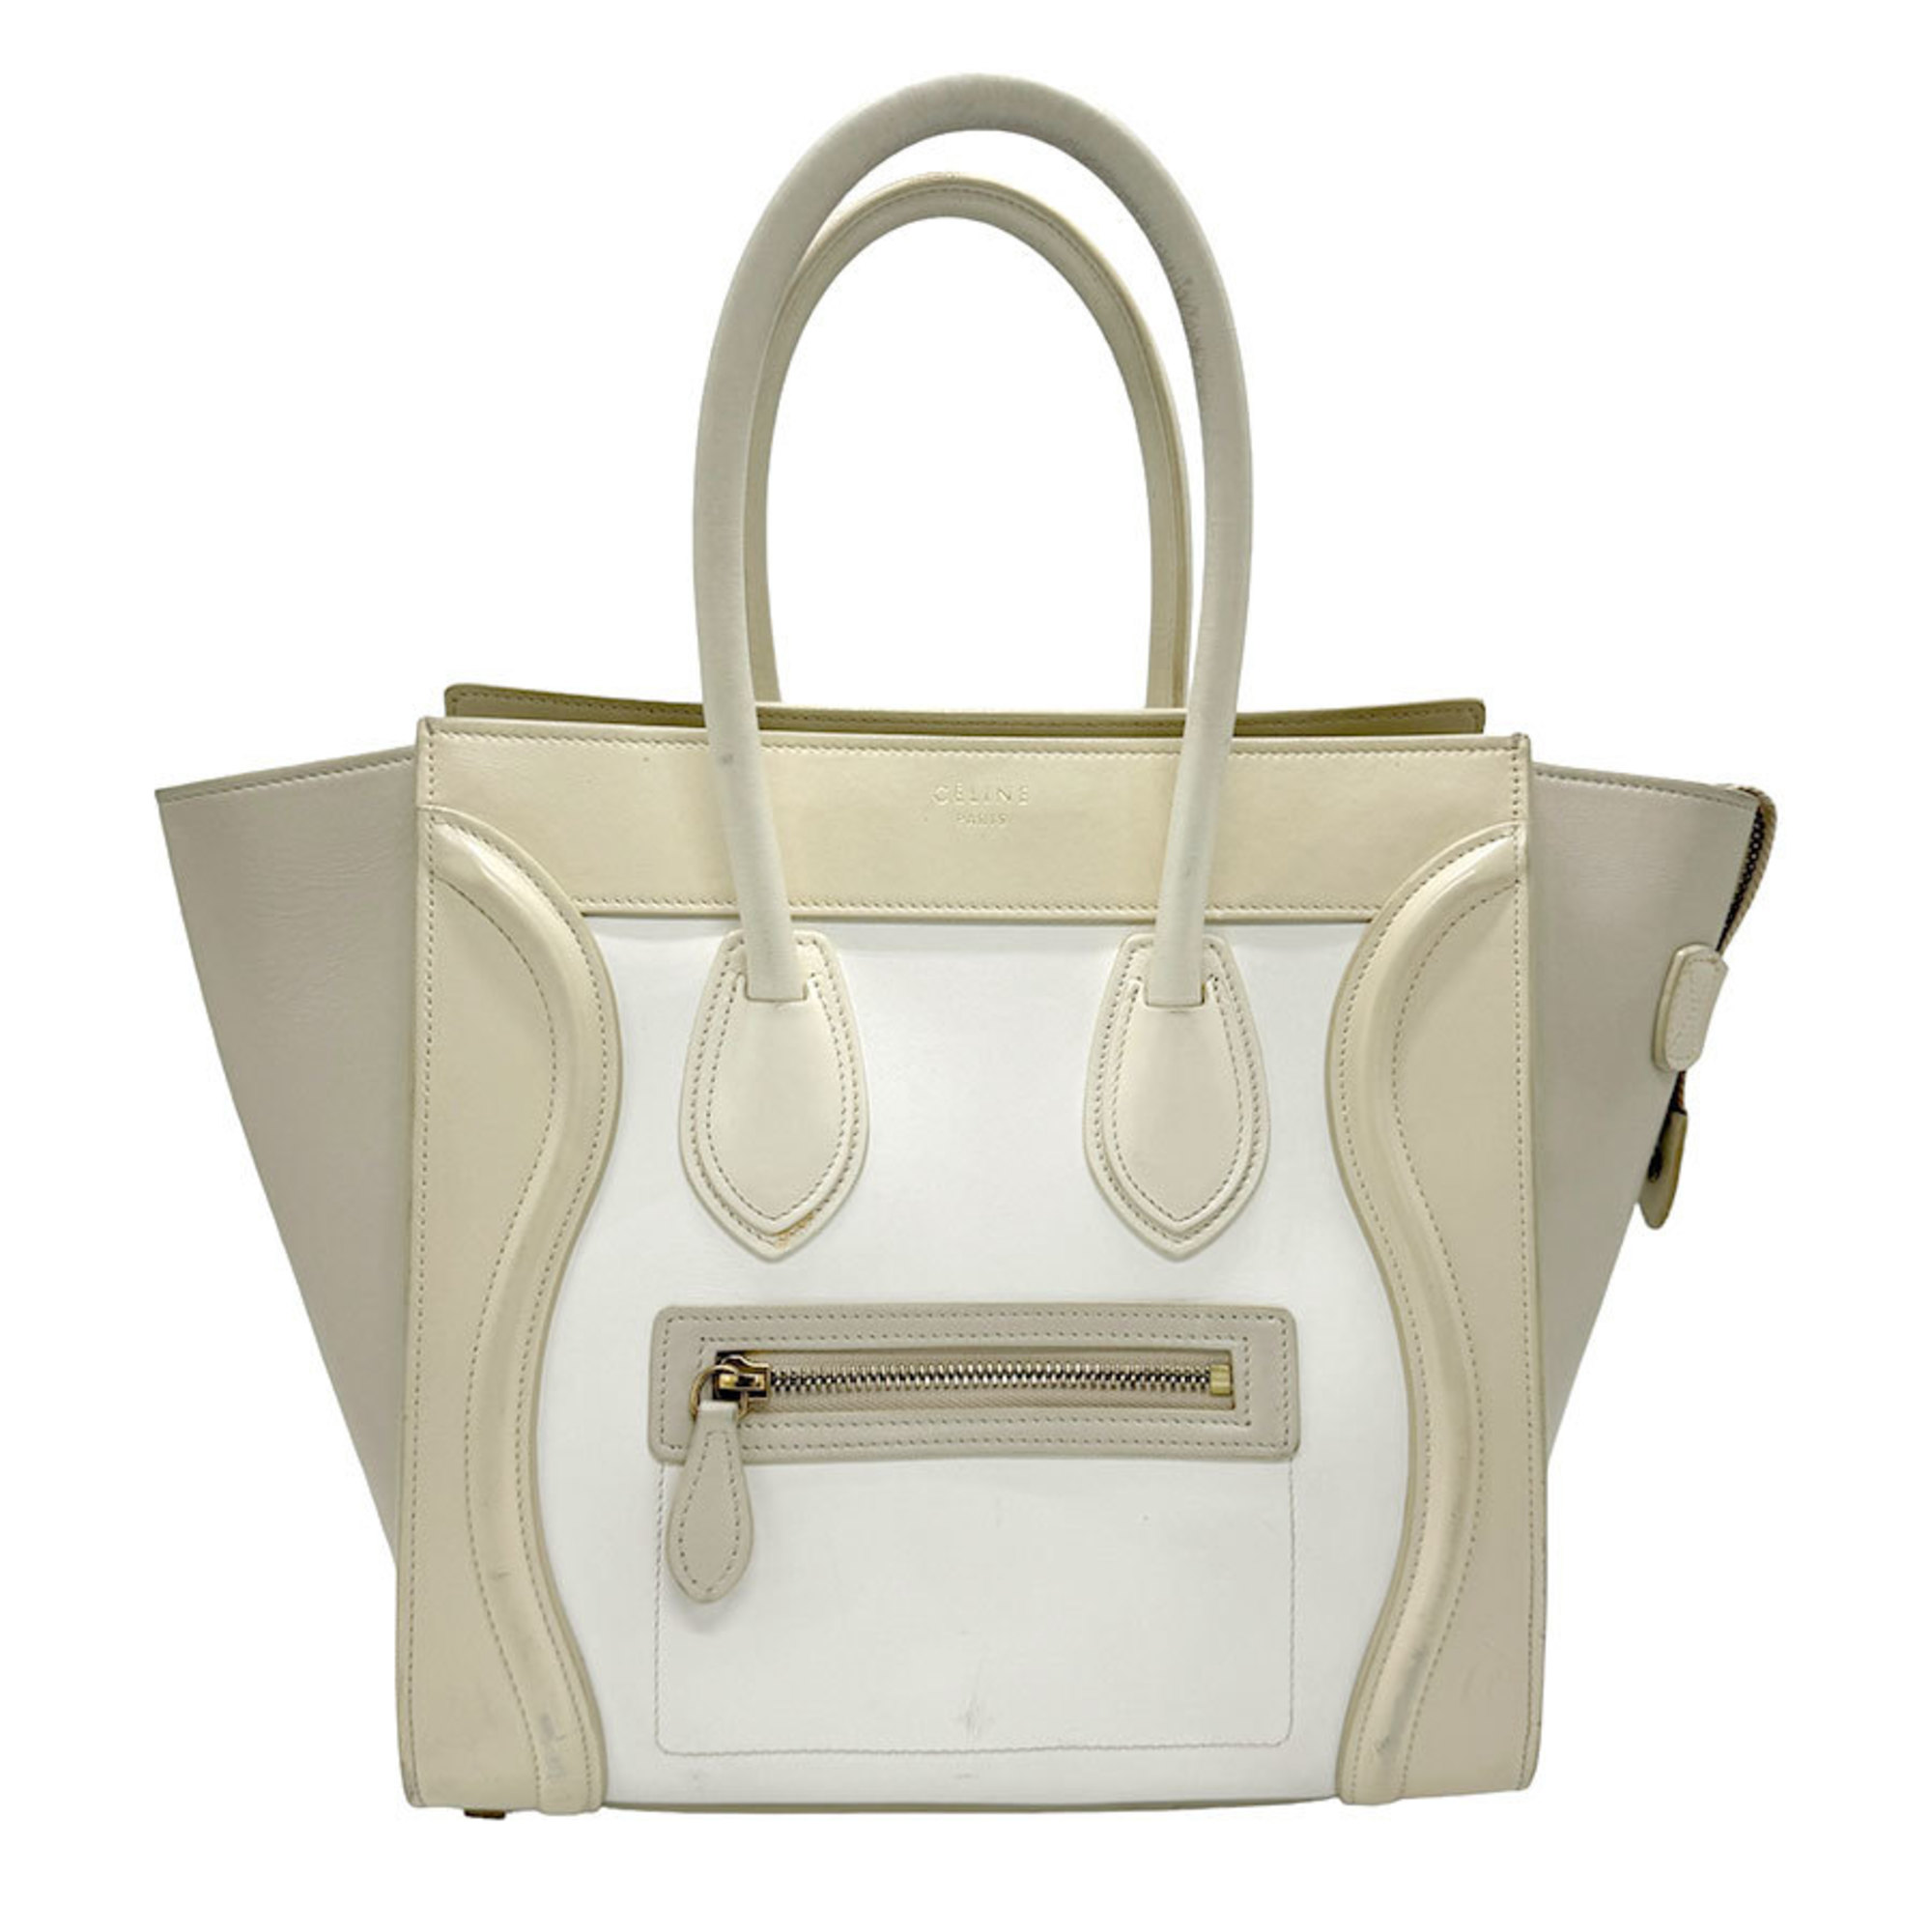 CELINE Handbag Luggage Micro Shopper Leather Beige White Women's z1382